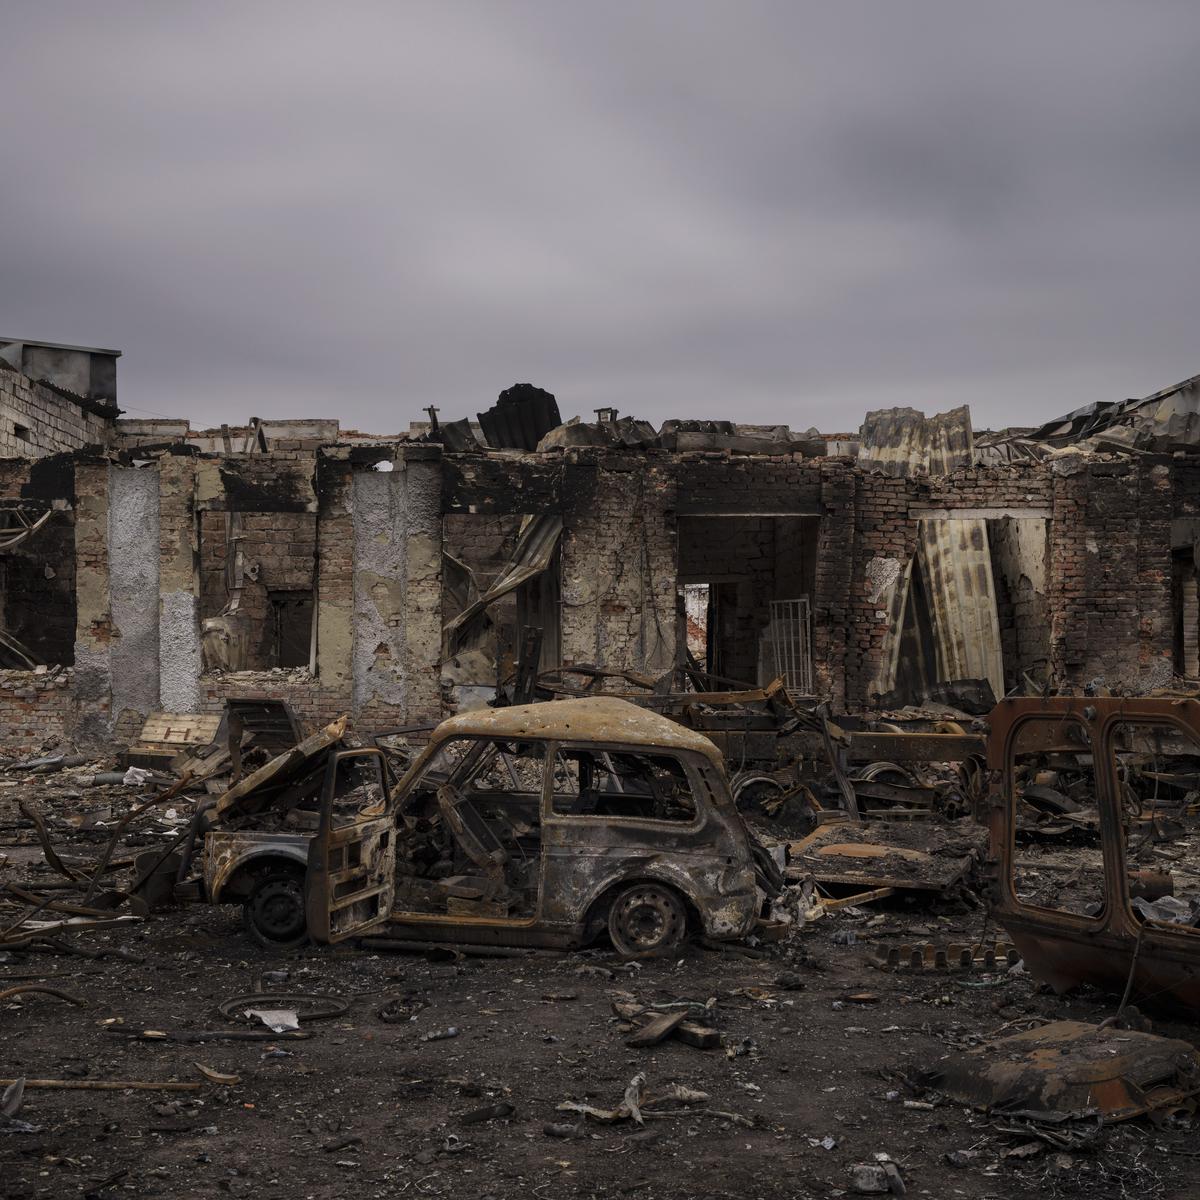 Rusia kian agresif satu per satu kota besar ukraina dikuasai, ibu kota kiev target terakhir